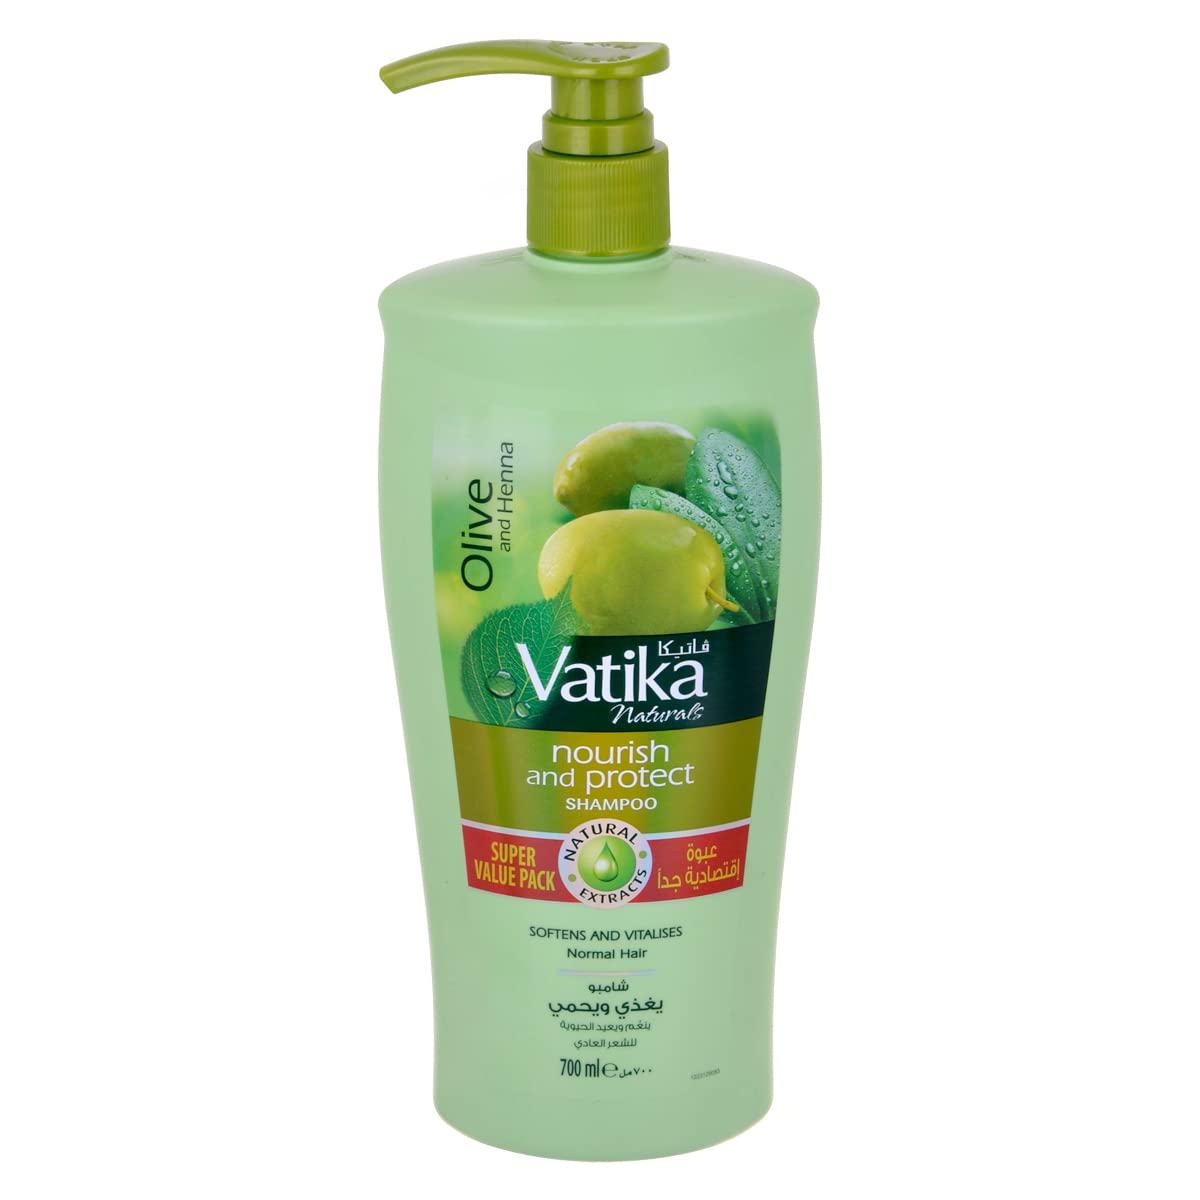 Vatika OLIVE AND HENNA Nourish And Protect Shampoo, Dabur (Ватика ОЛИВКА И ХНА Шампунь ПИТАНИЕ И ЗАЩИТА для нормальных волос, Дабур), 700 мл.